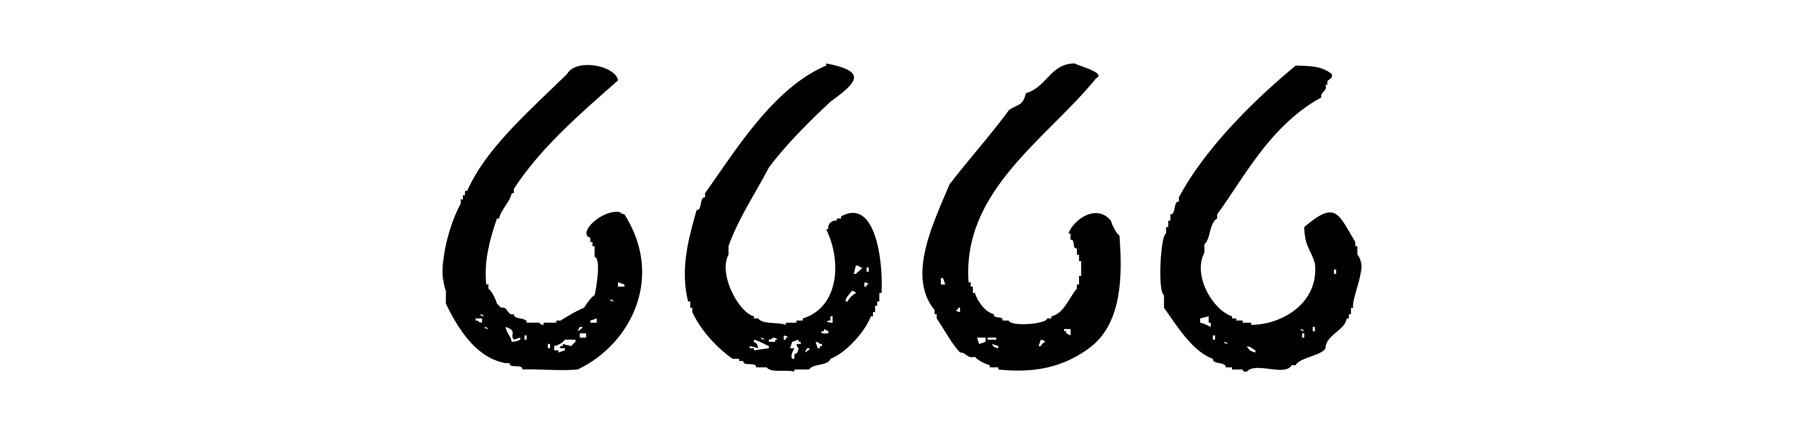 6666 Logo